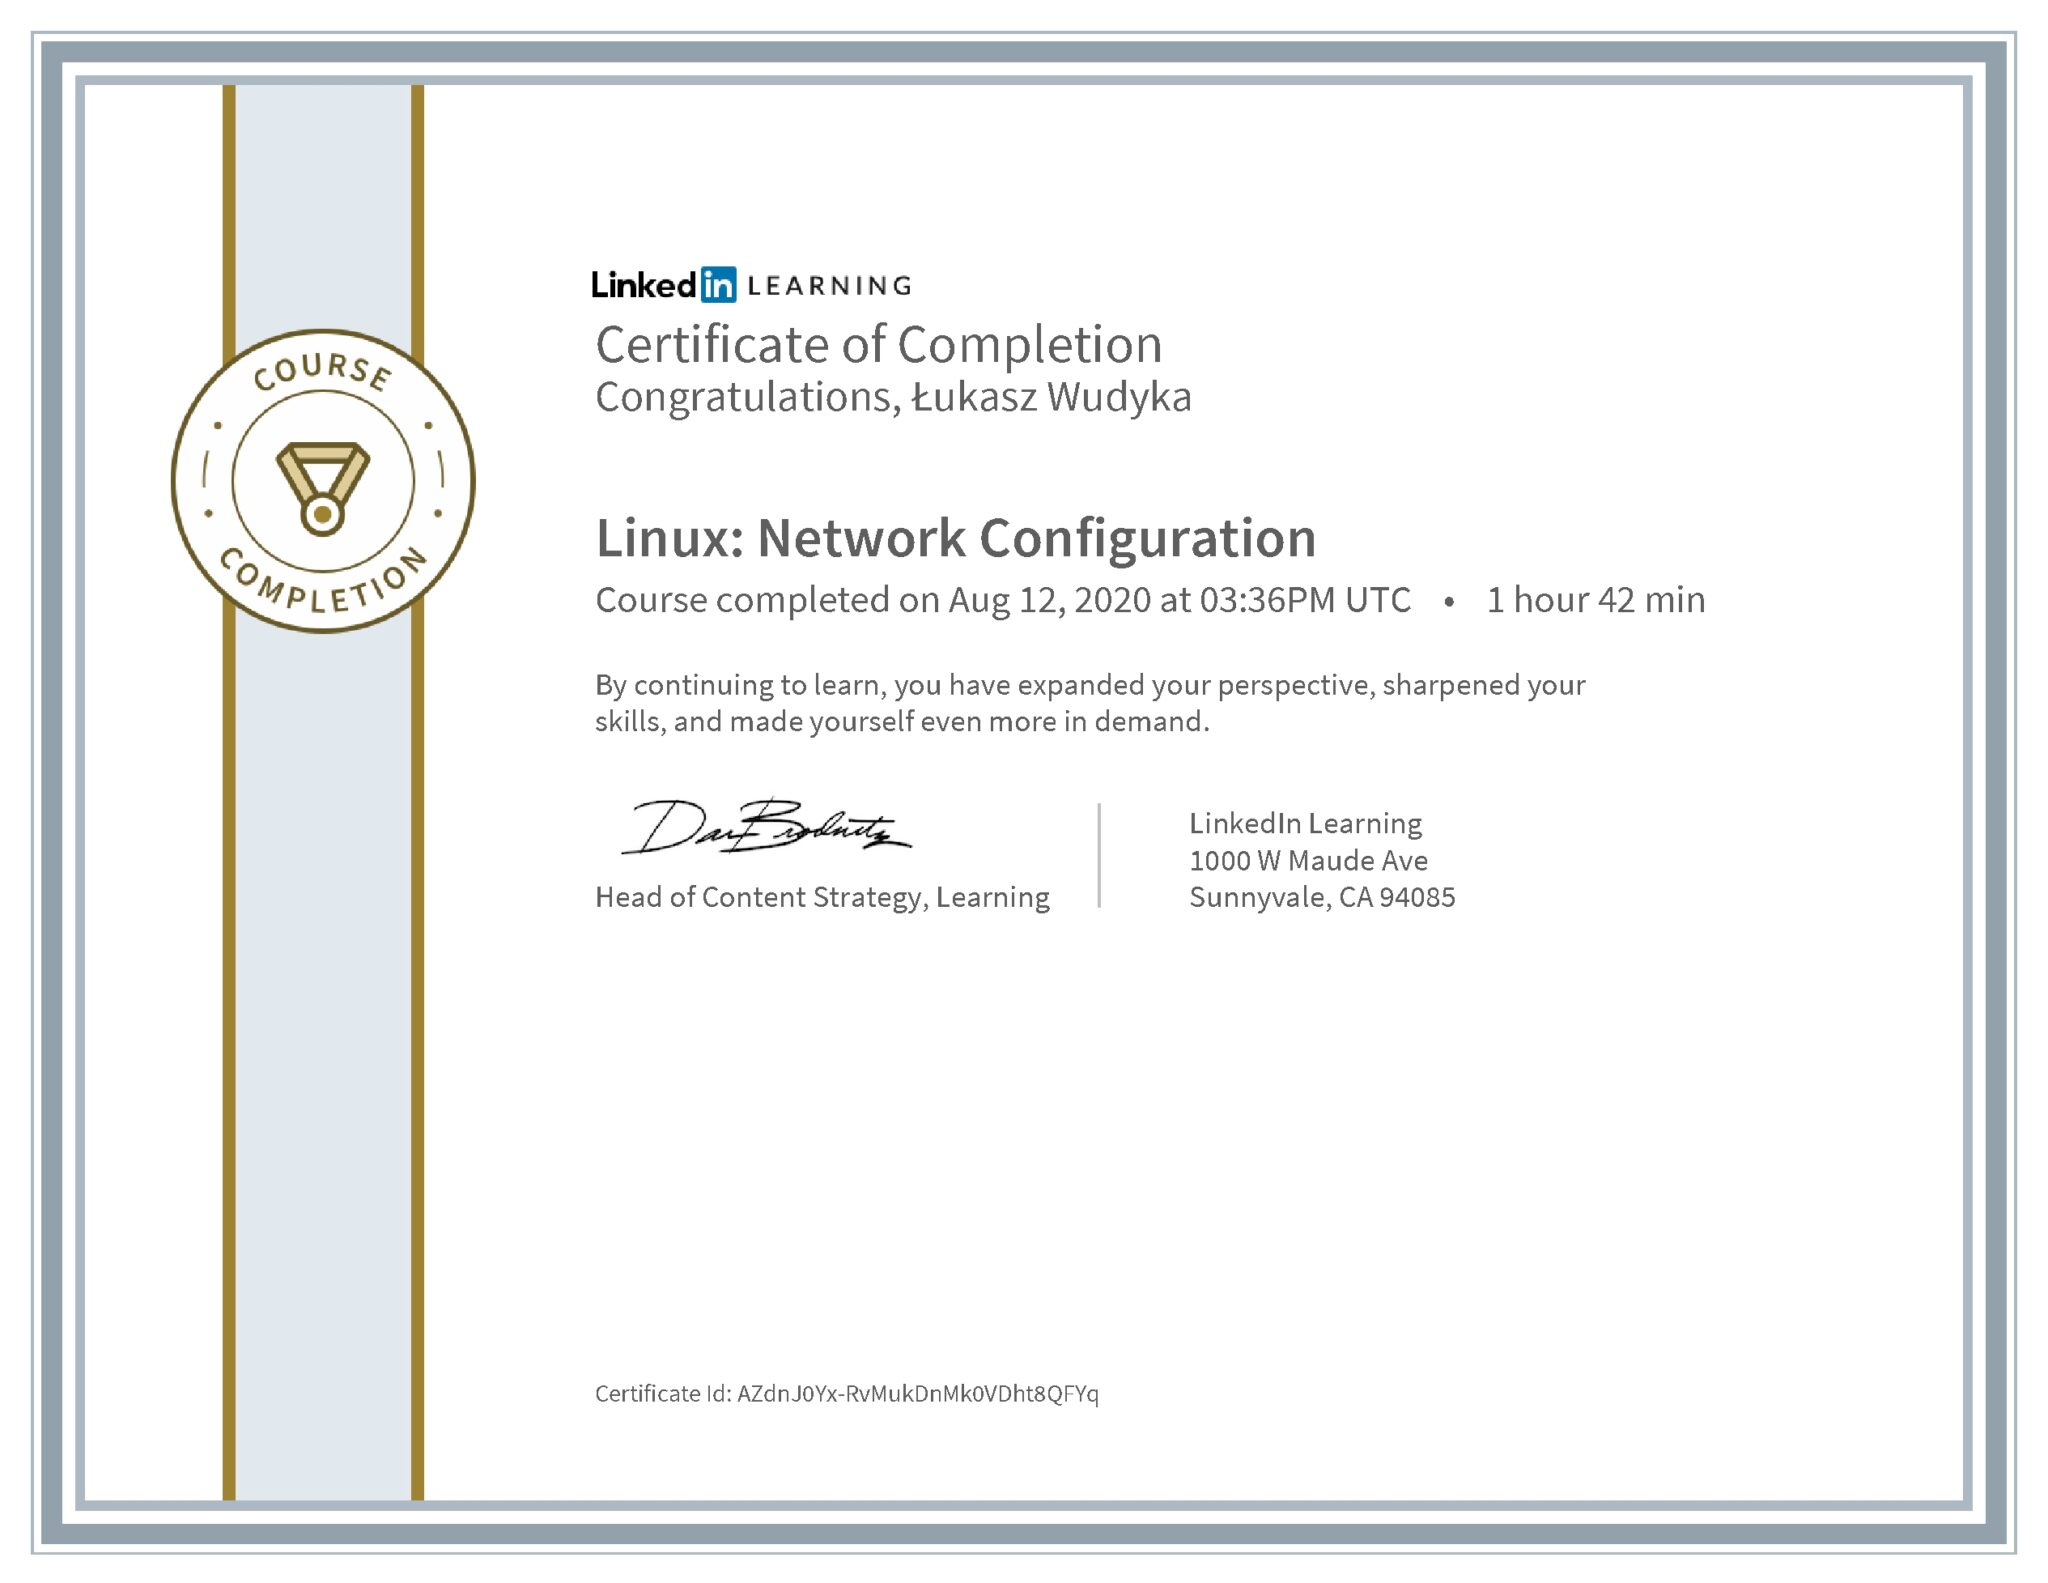 Łukasz Wudyka certyfikat LinkedIn Linux: Network Configuration